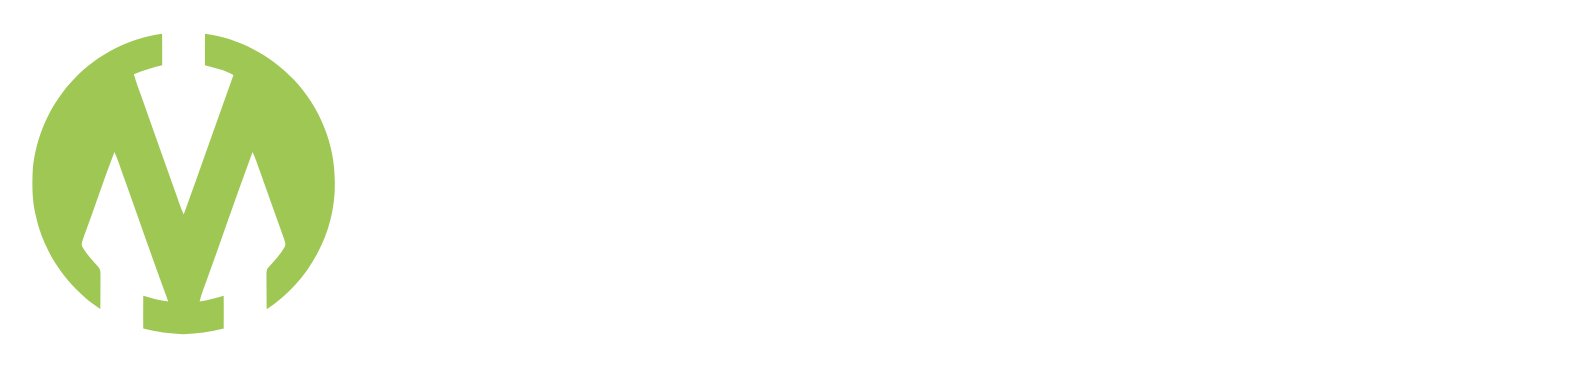 Montauk Renewables Logo groß für dunkle Hintergründe (transparentes PNG)